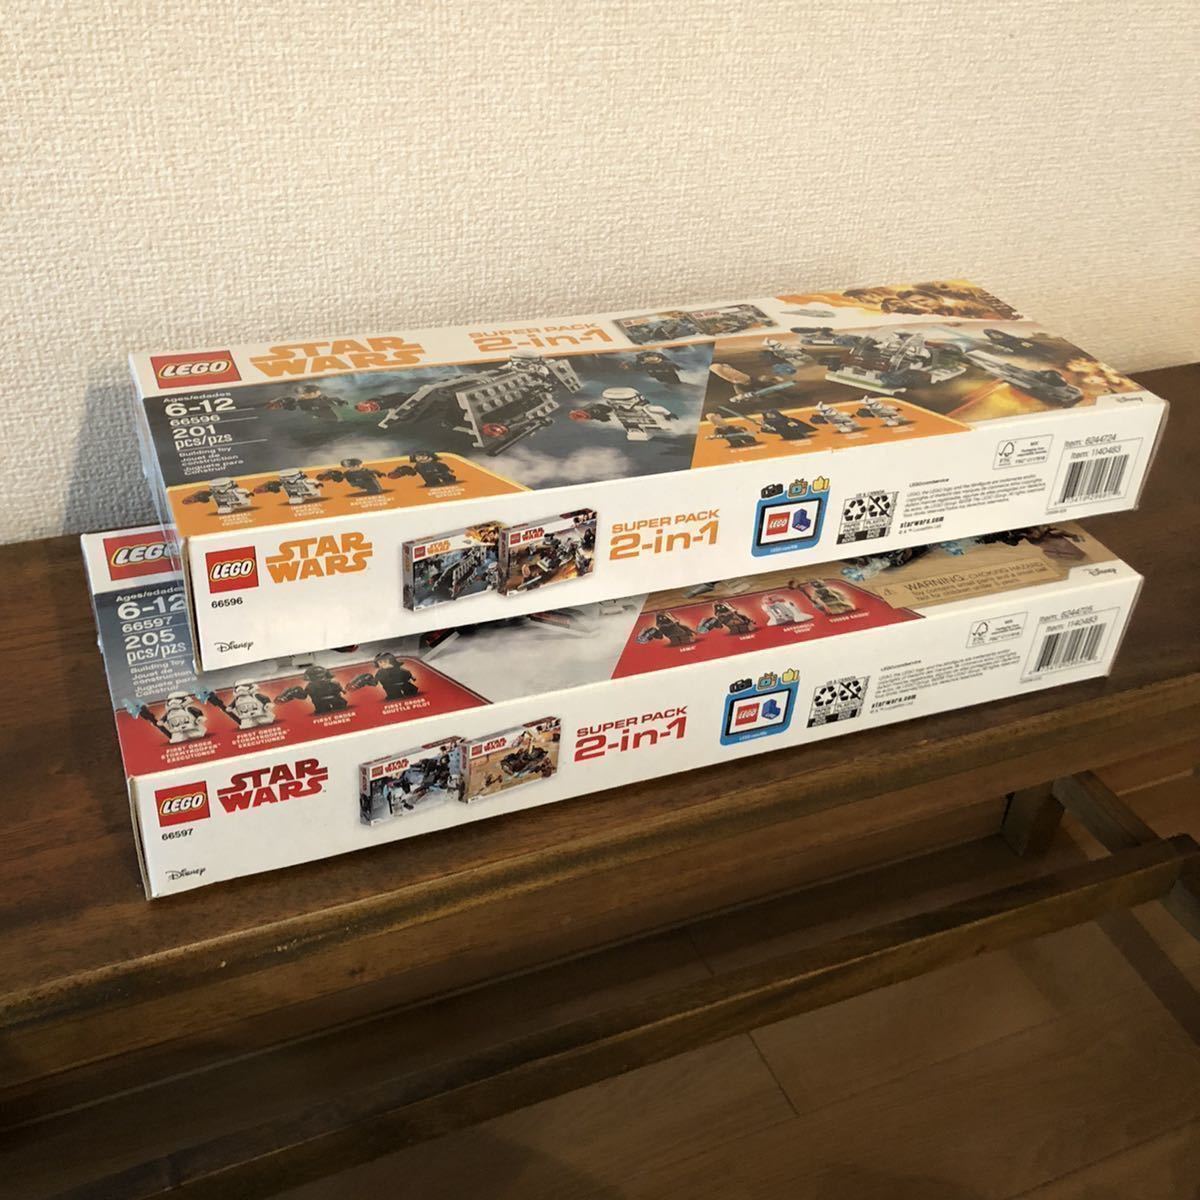 LEGO レゴ 66596 66597 スターウォーズ バトルパック SUPER PACK 2-in-1 新品未開封 日本未発売_画像5